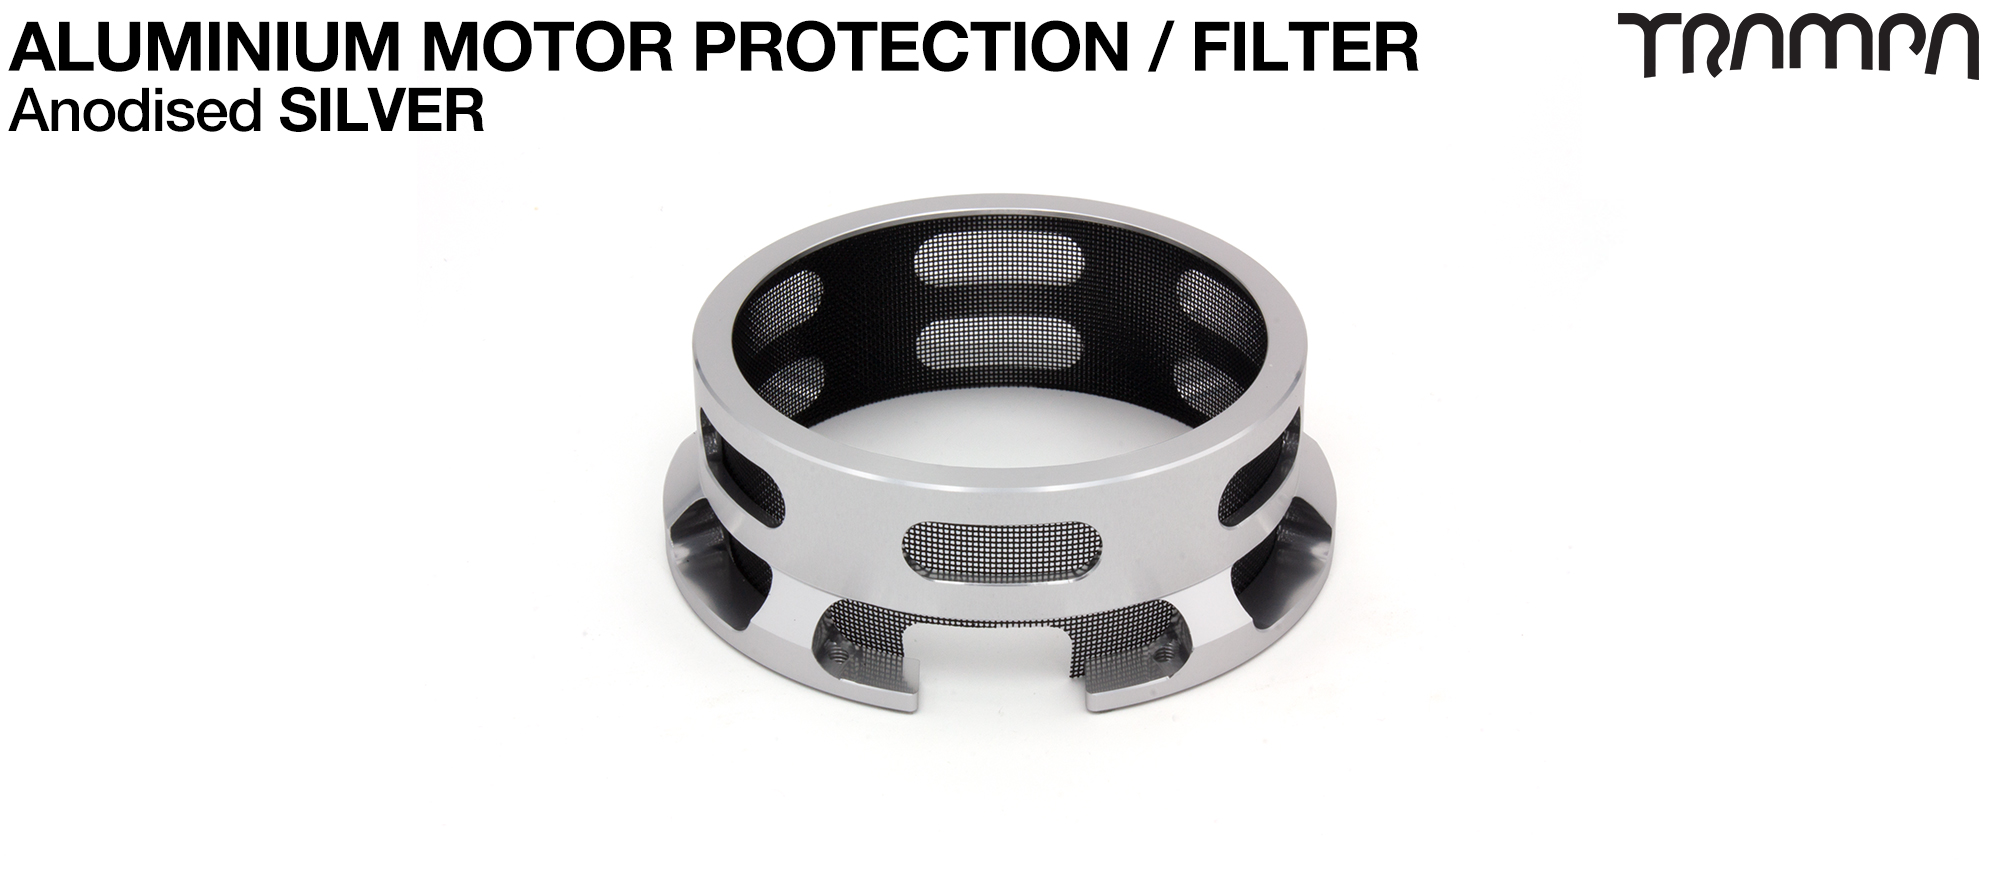 Aluminium HALF CAGE Motor protection - SILVER